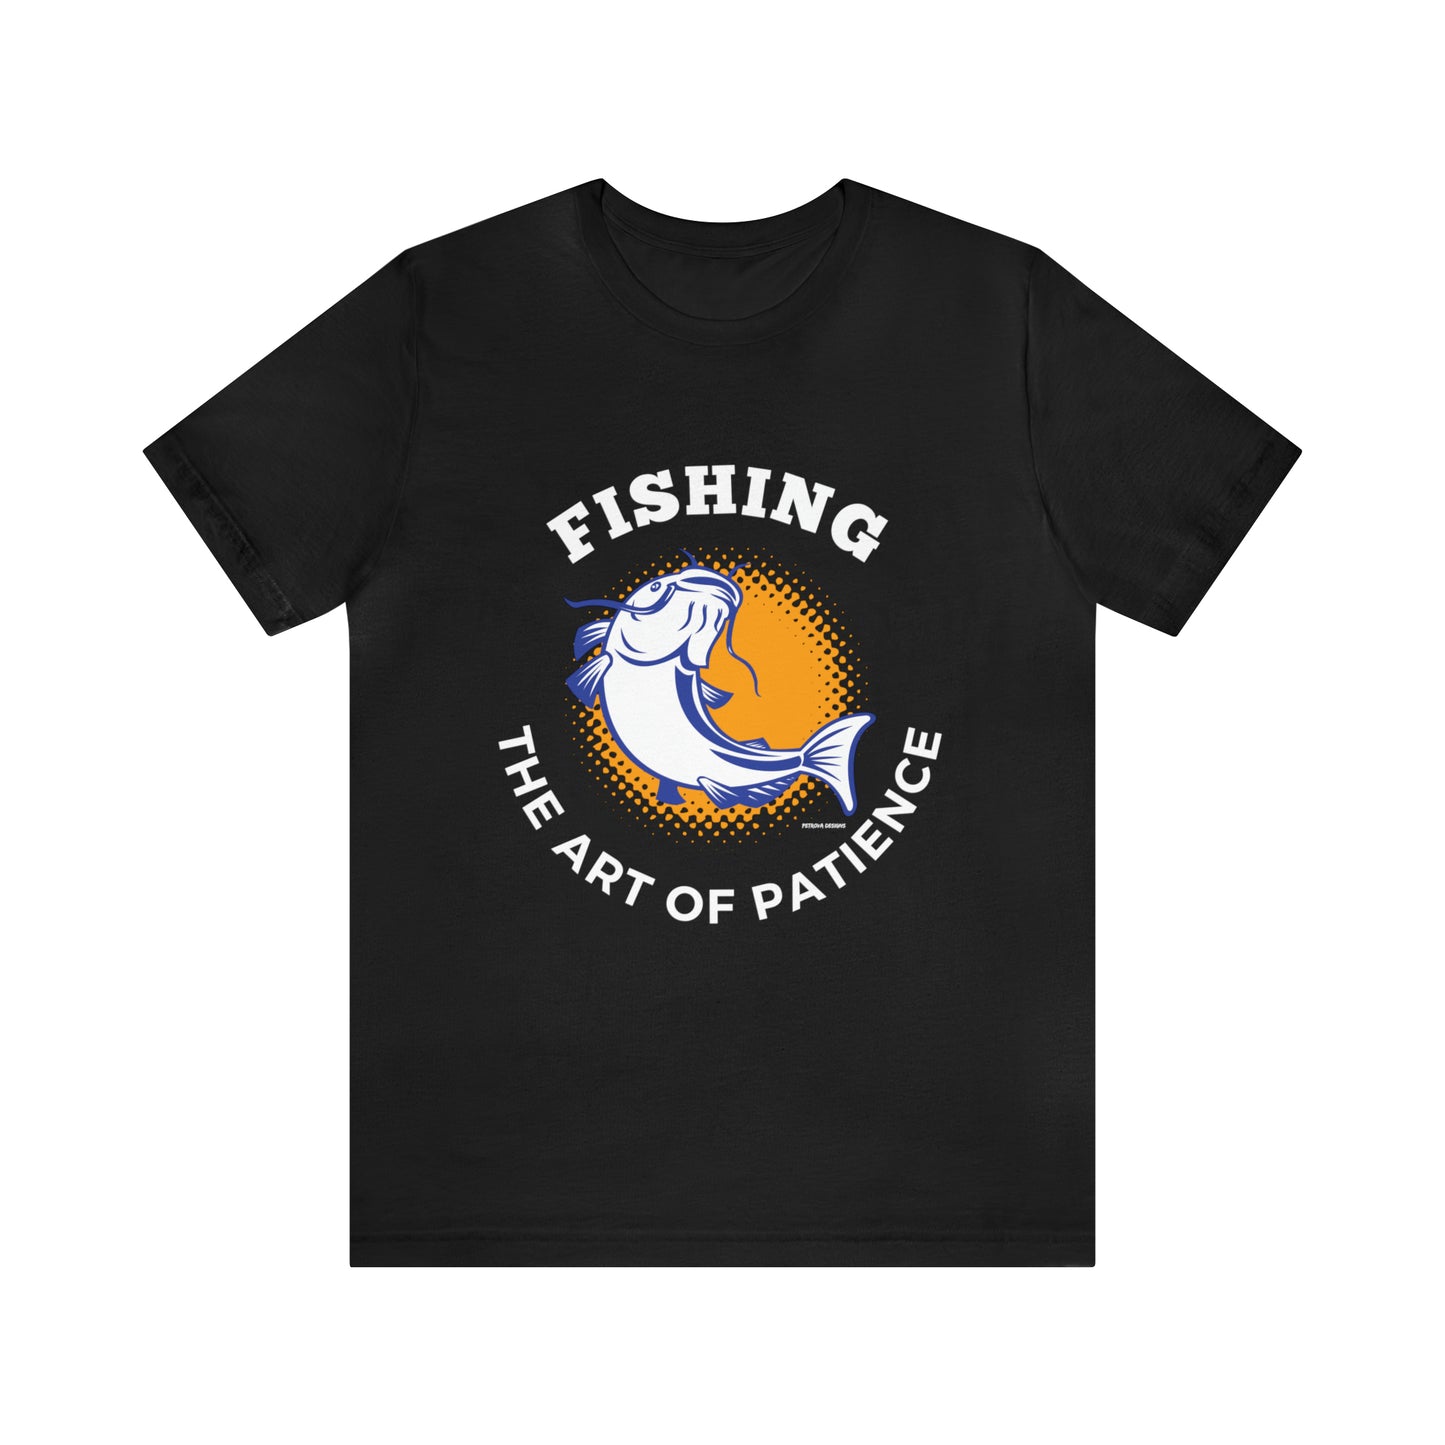 Black T-Shirt Tshirt Design Gift for Friend and Family Short Sleeved Shirt Fishing Hobby Aesthetic Petrova Designs